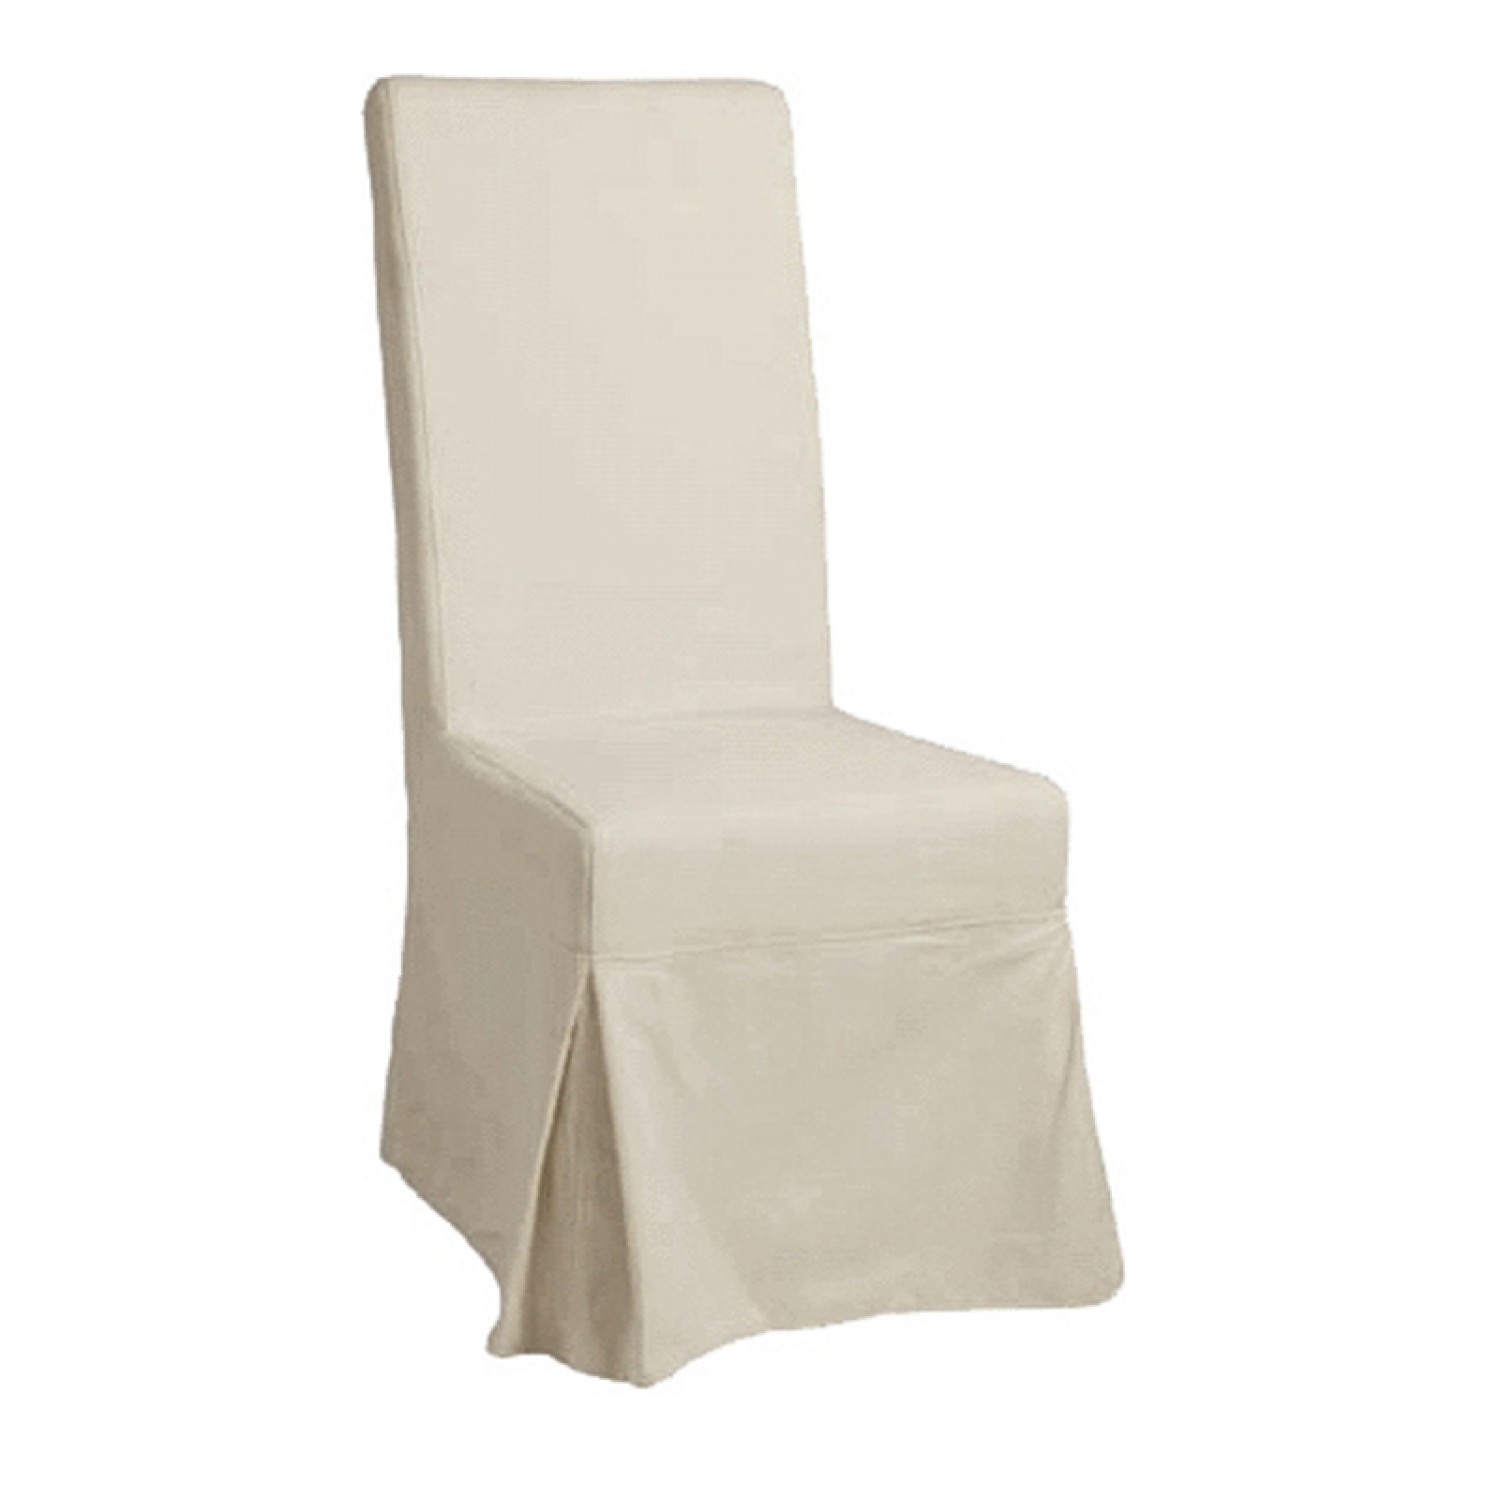 white slipcovered dining chairs photo - 2